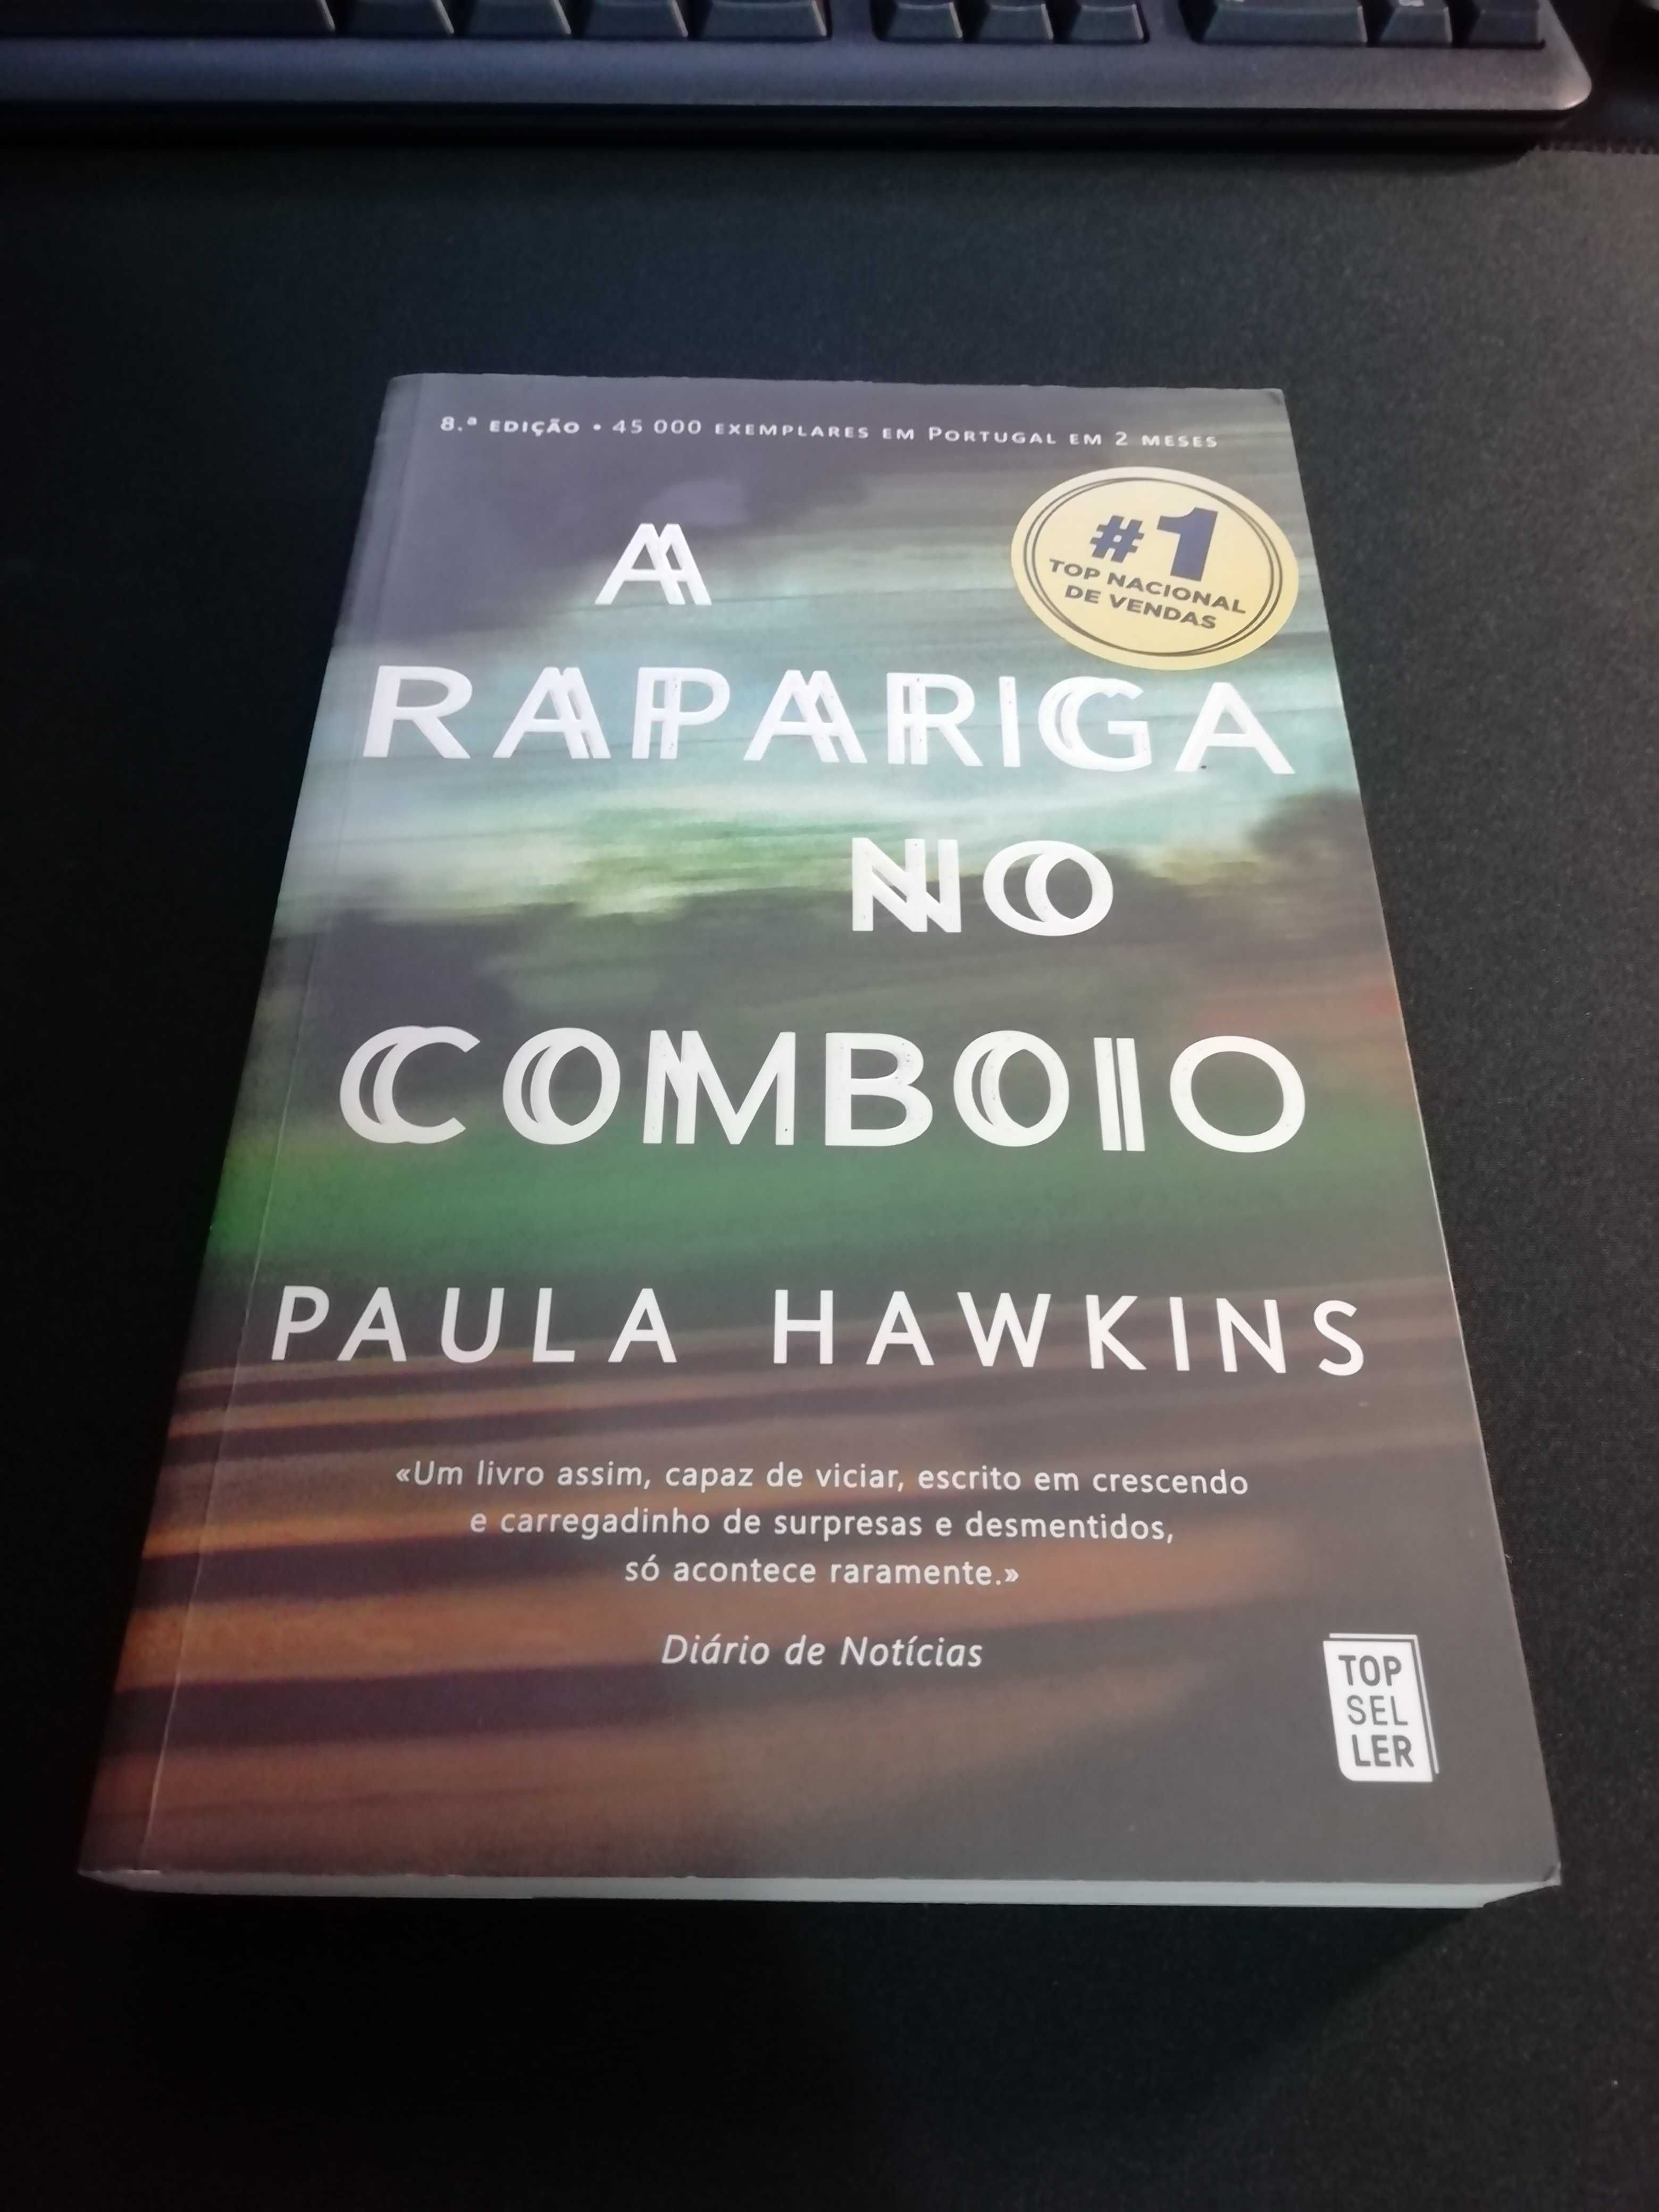 Livro, "A Rapariga no Comboio" de Paula Hawkins